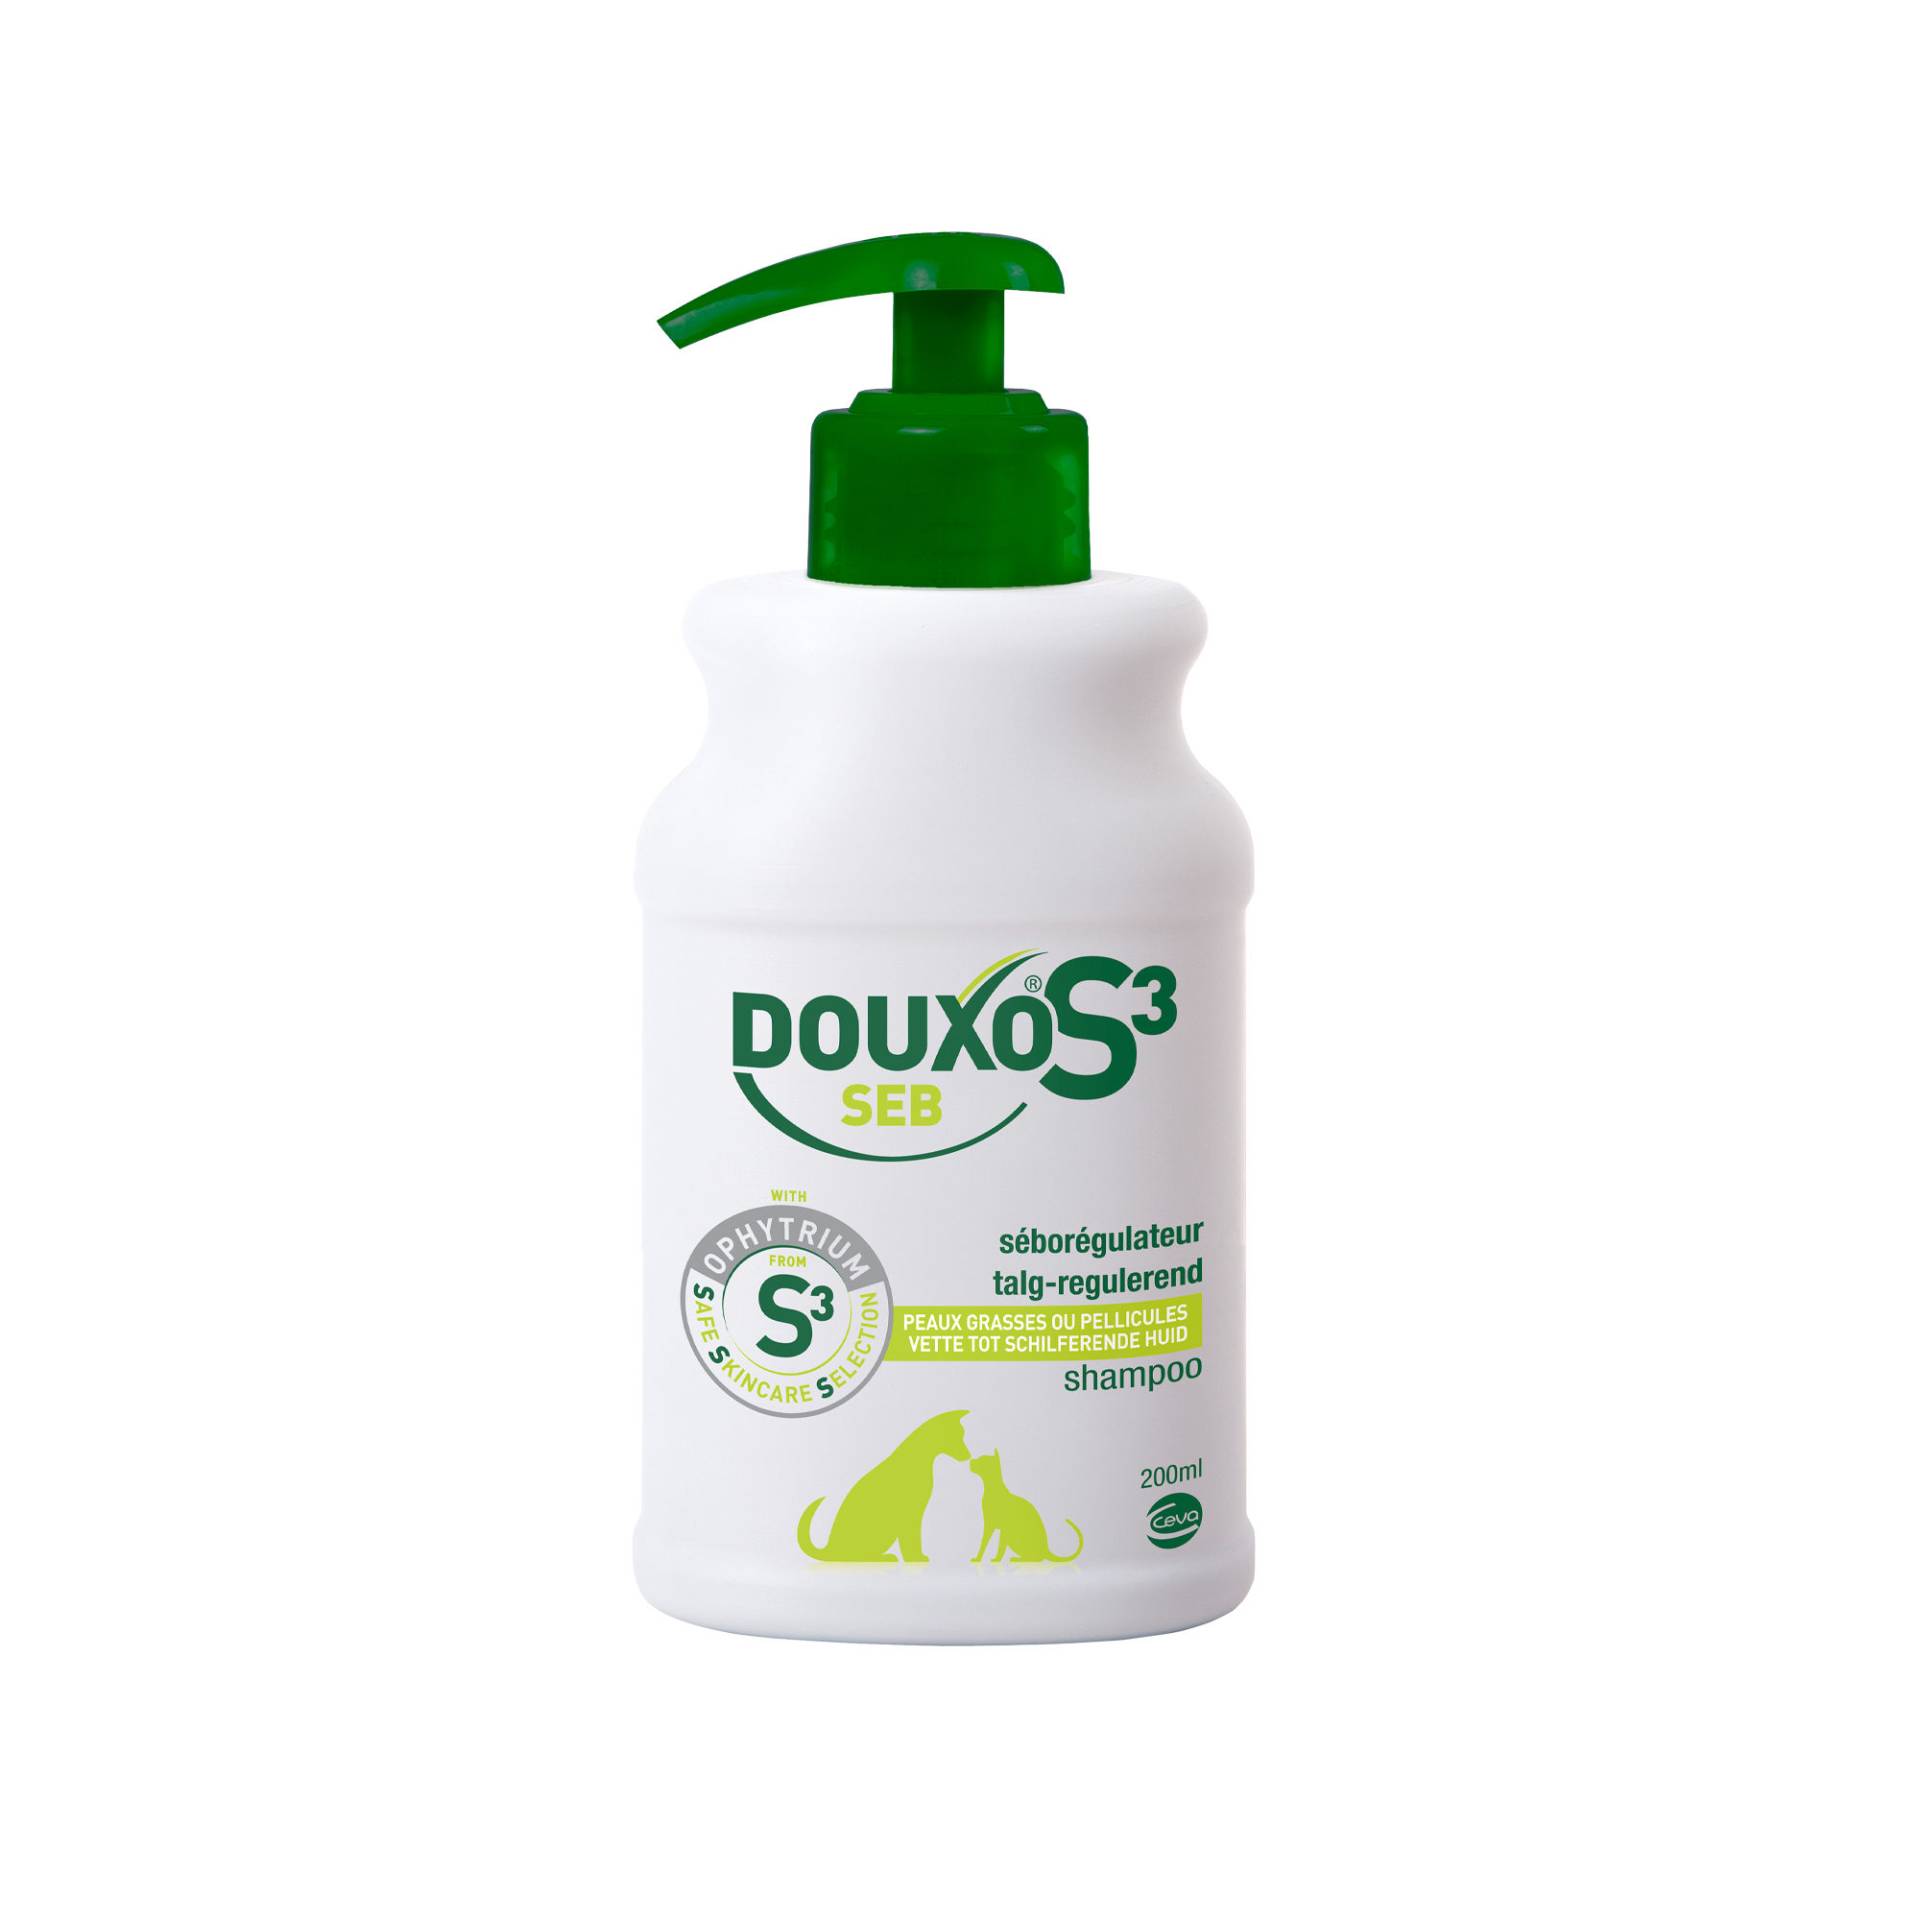 Douxo S3 Seb - Shampoo - 200 ml von Douxo